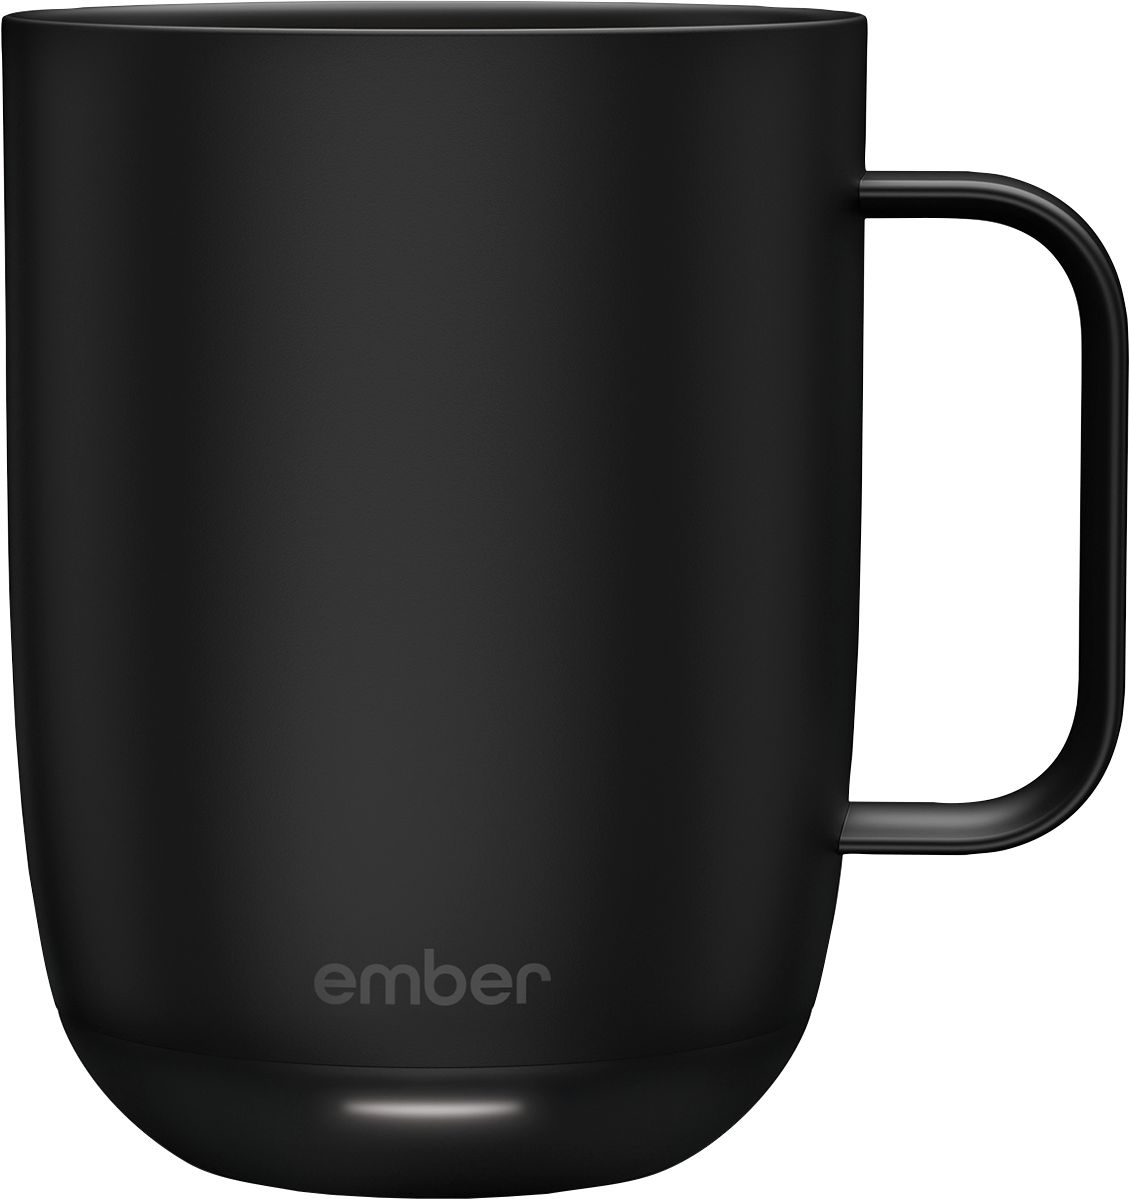 Ember Temperature Control Smart Mug² 14 oz Black CM191400US - Best Buy